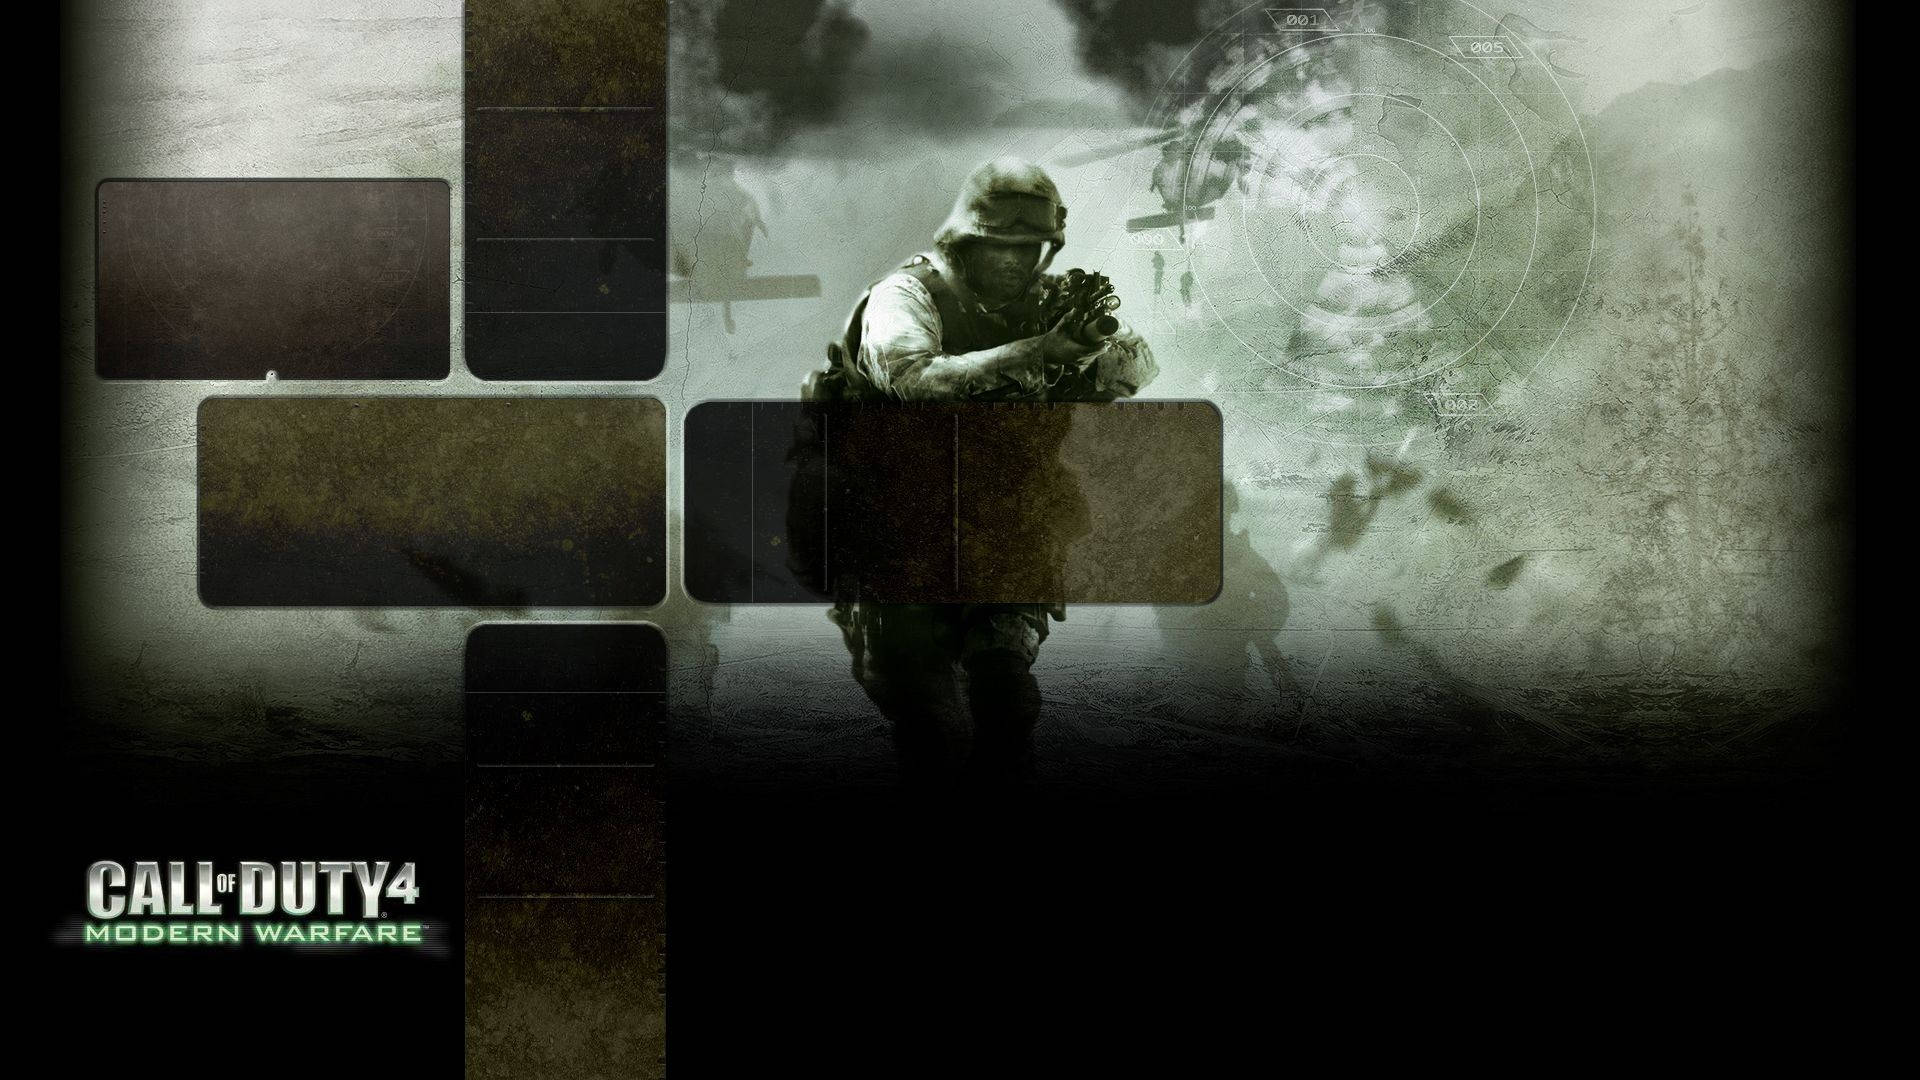 Ps3 Call Of Duty 4 Wallpaper